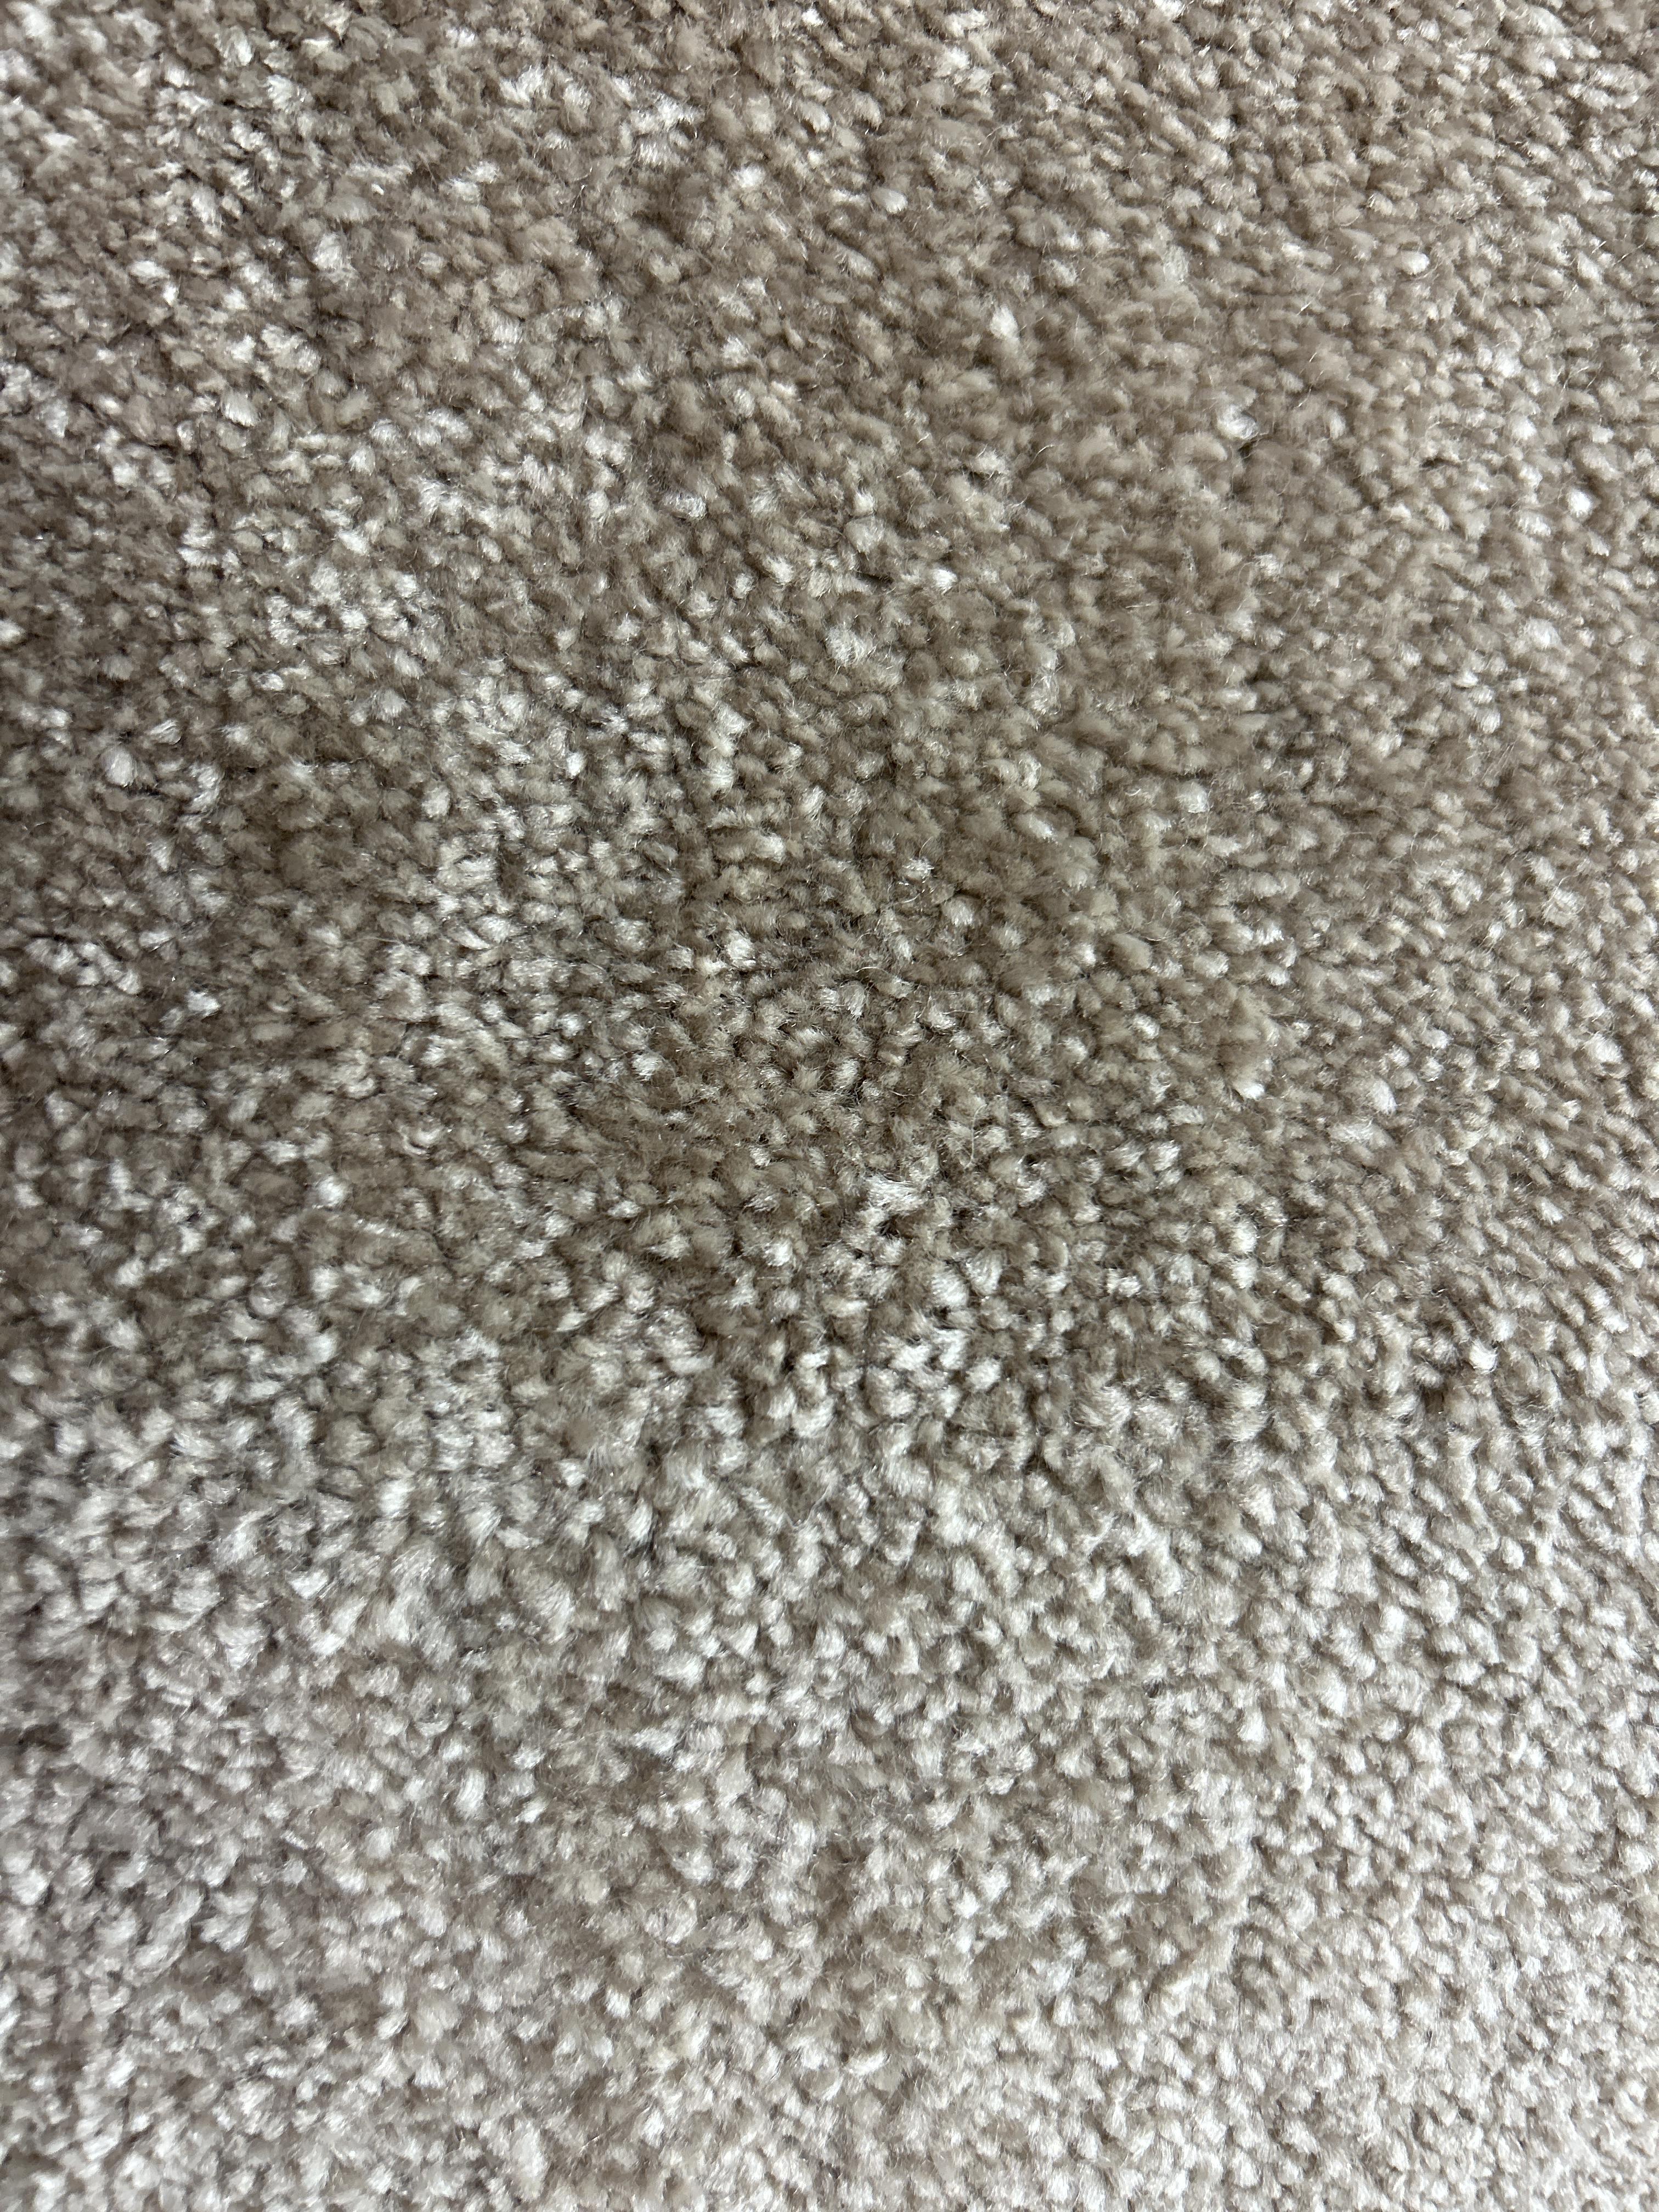 Harragote carpet